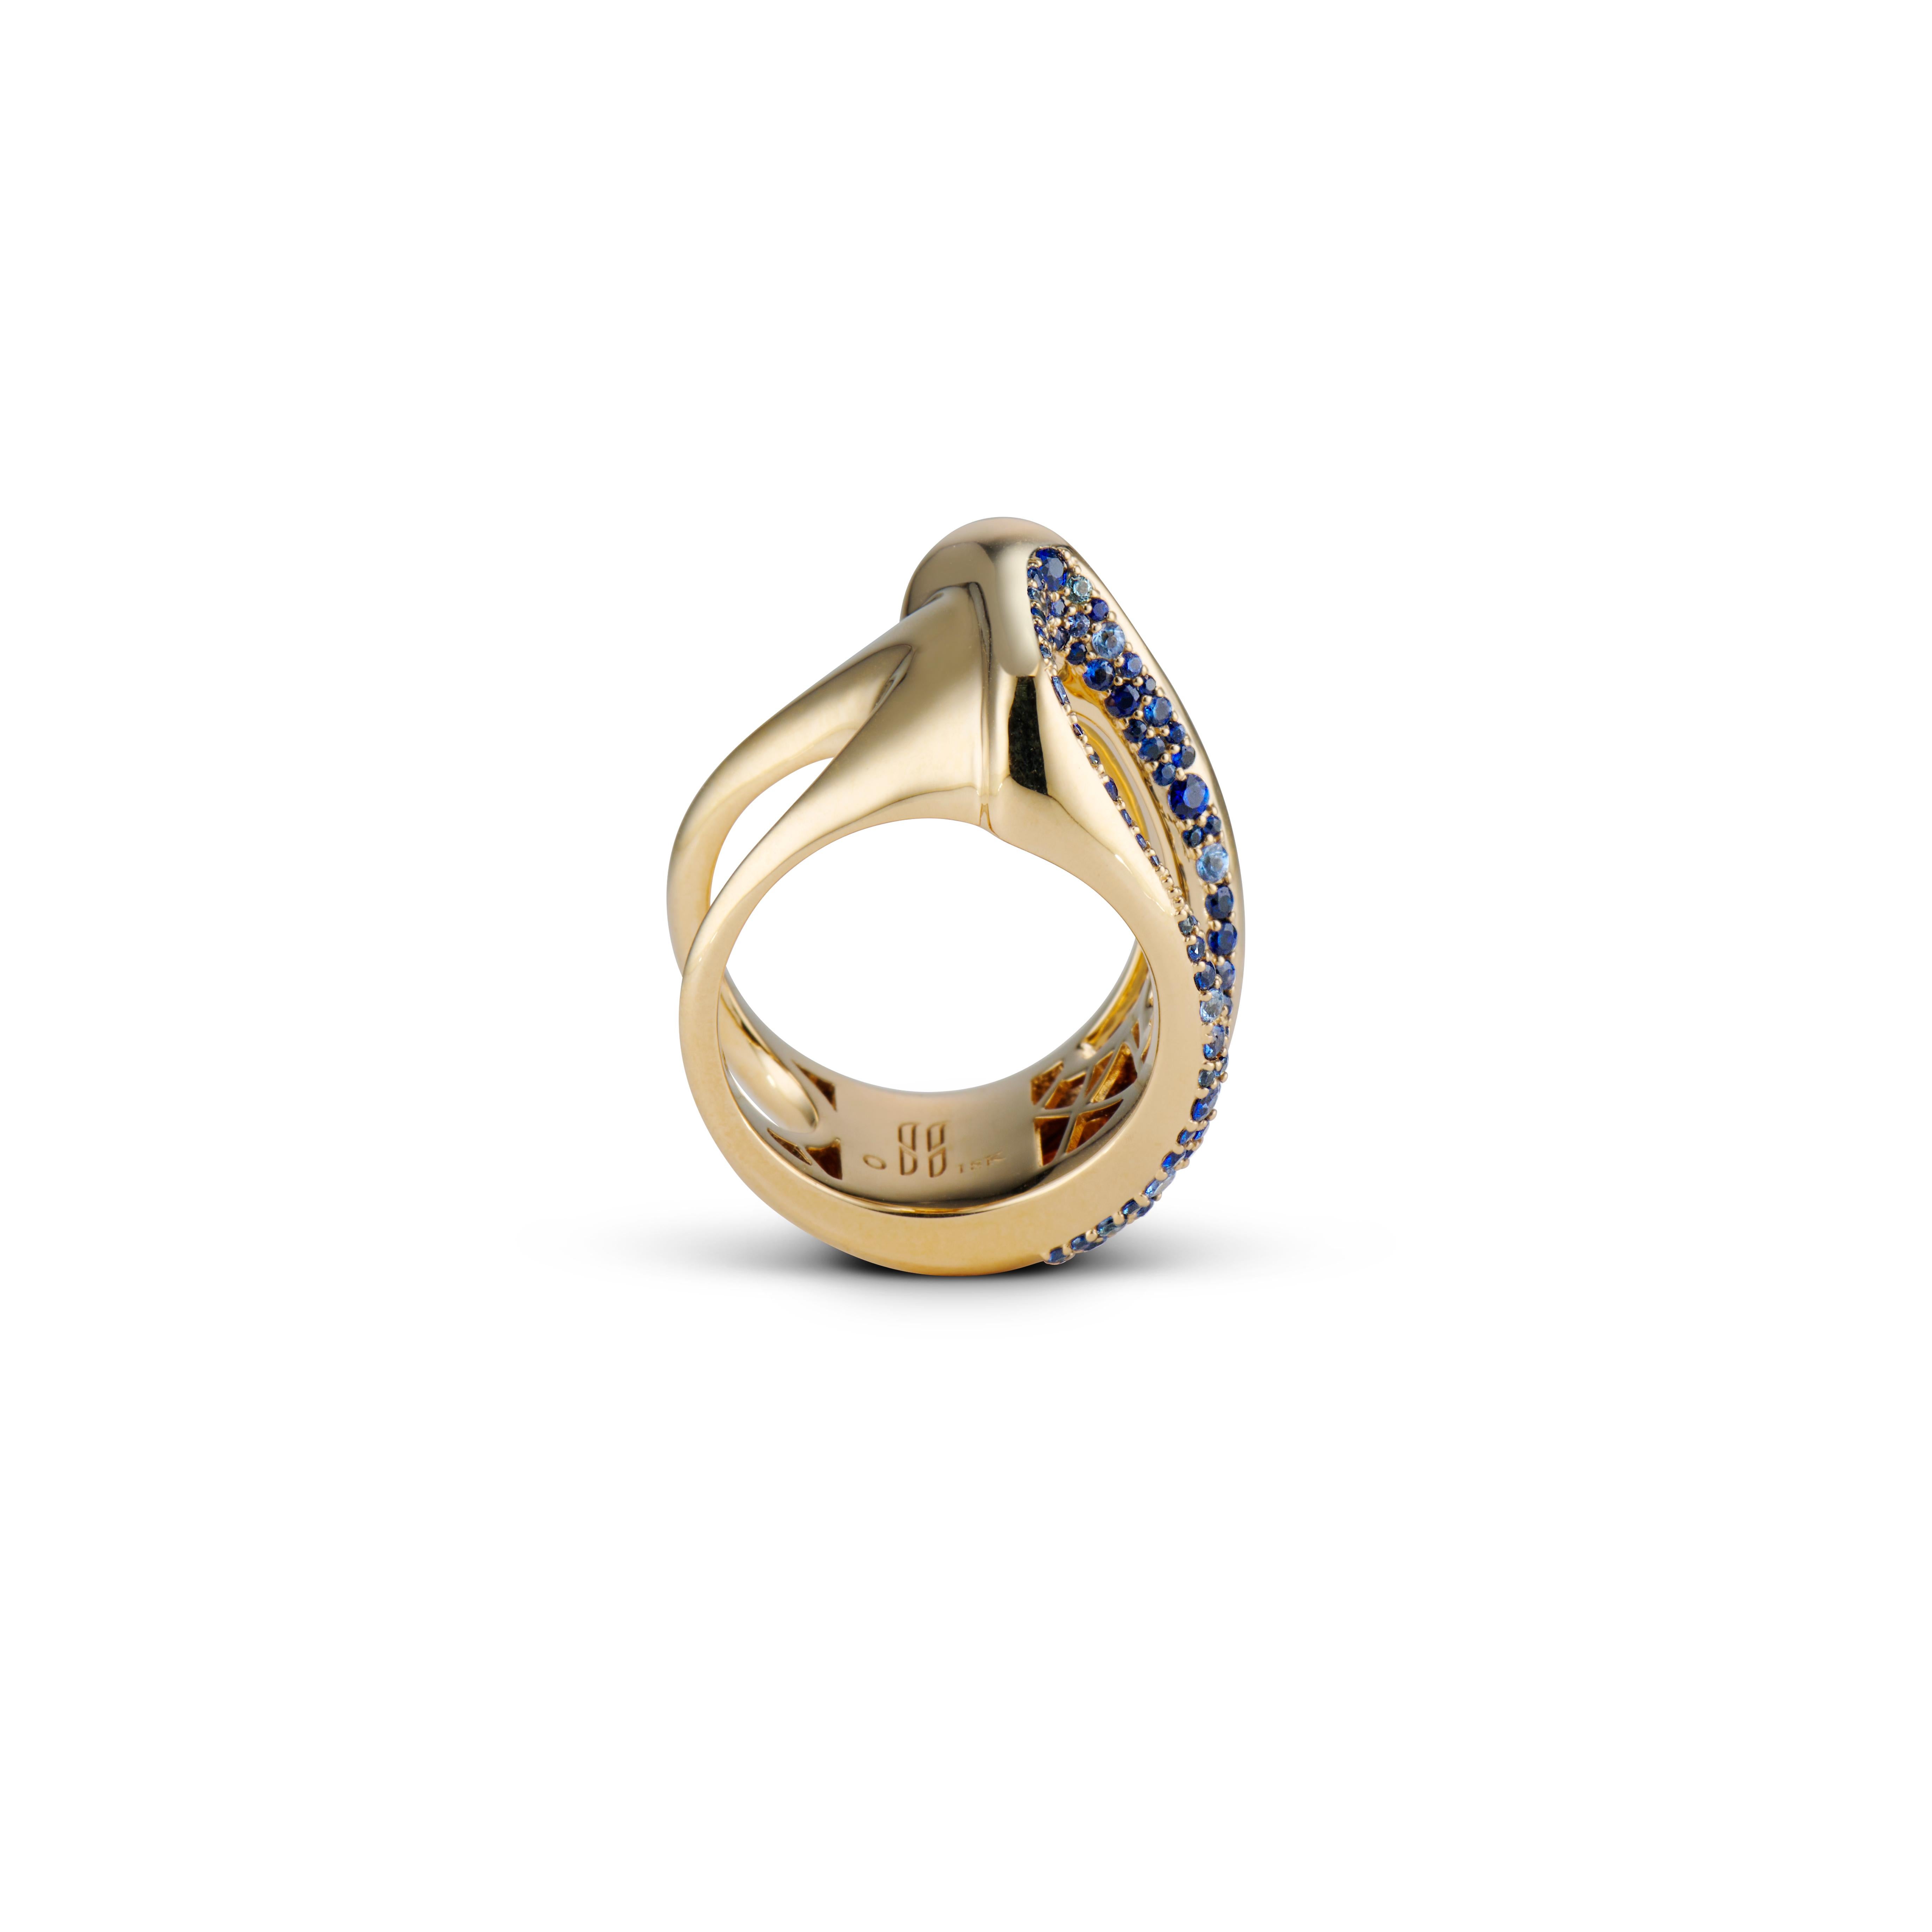 JV Insardi 18 Karat Gold Sculptural Ring with Blue Sapphires 4